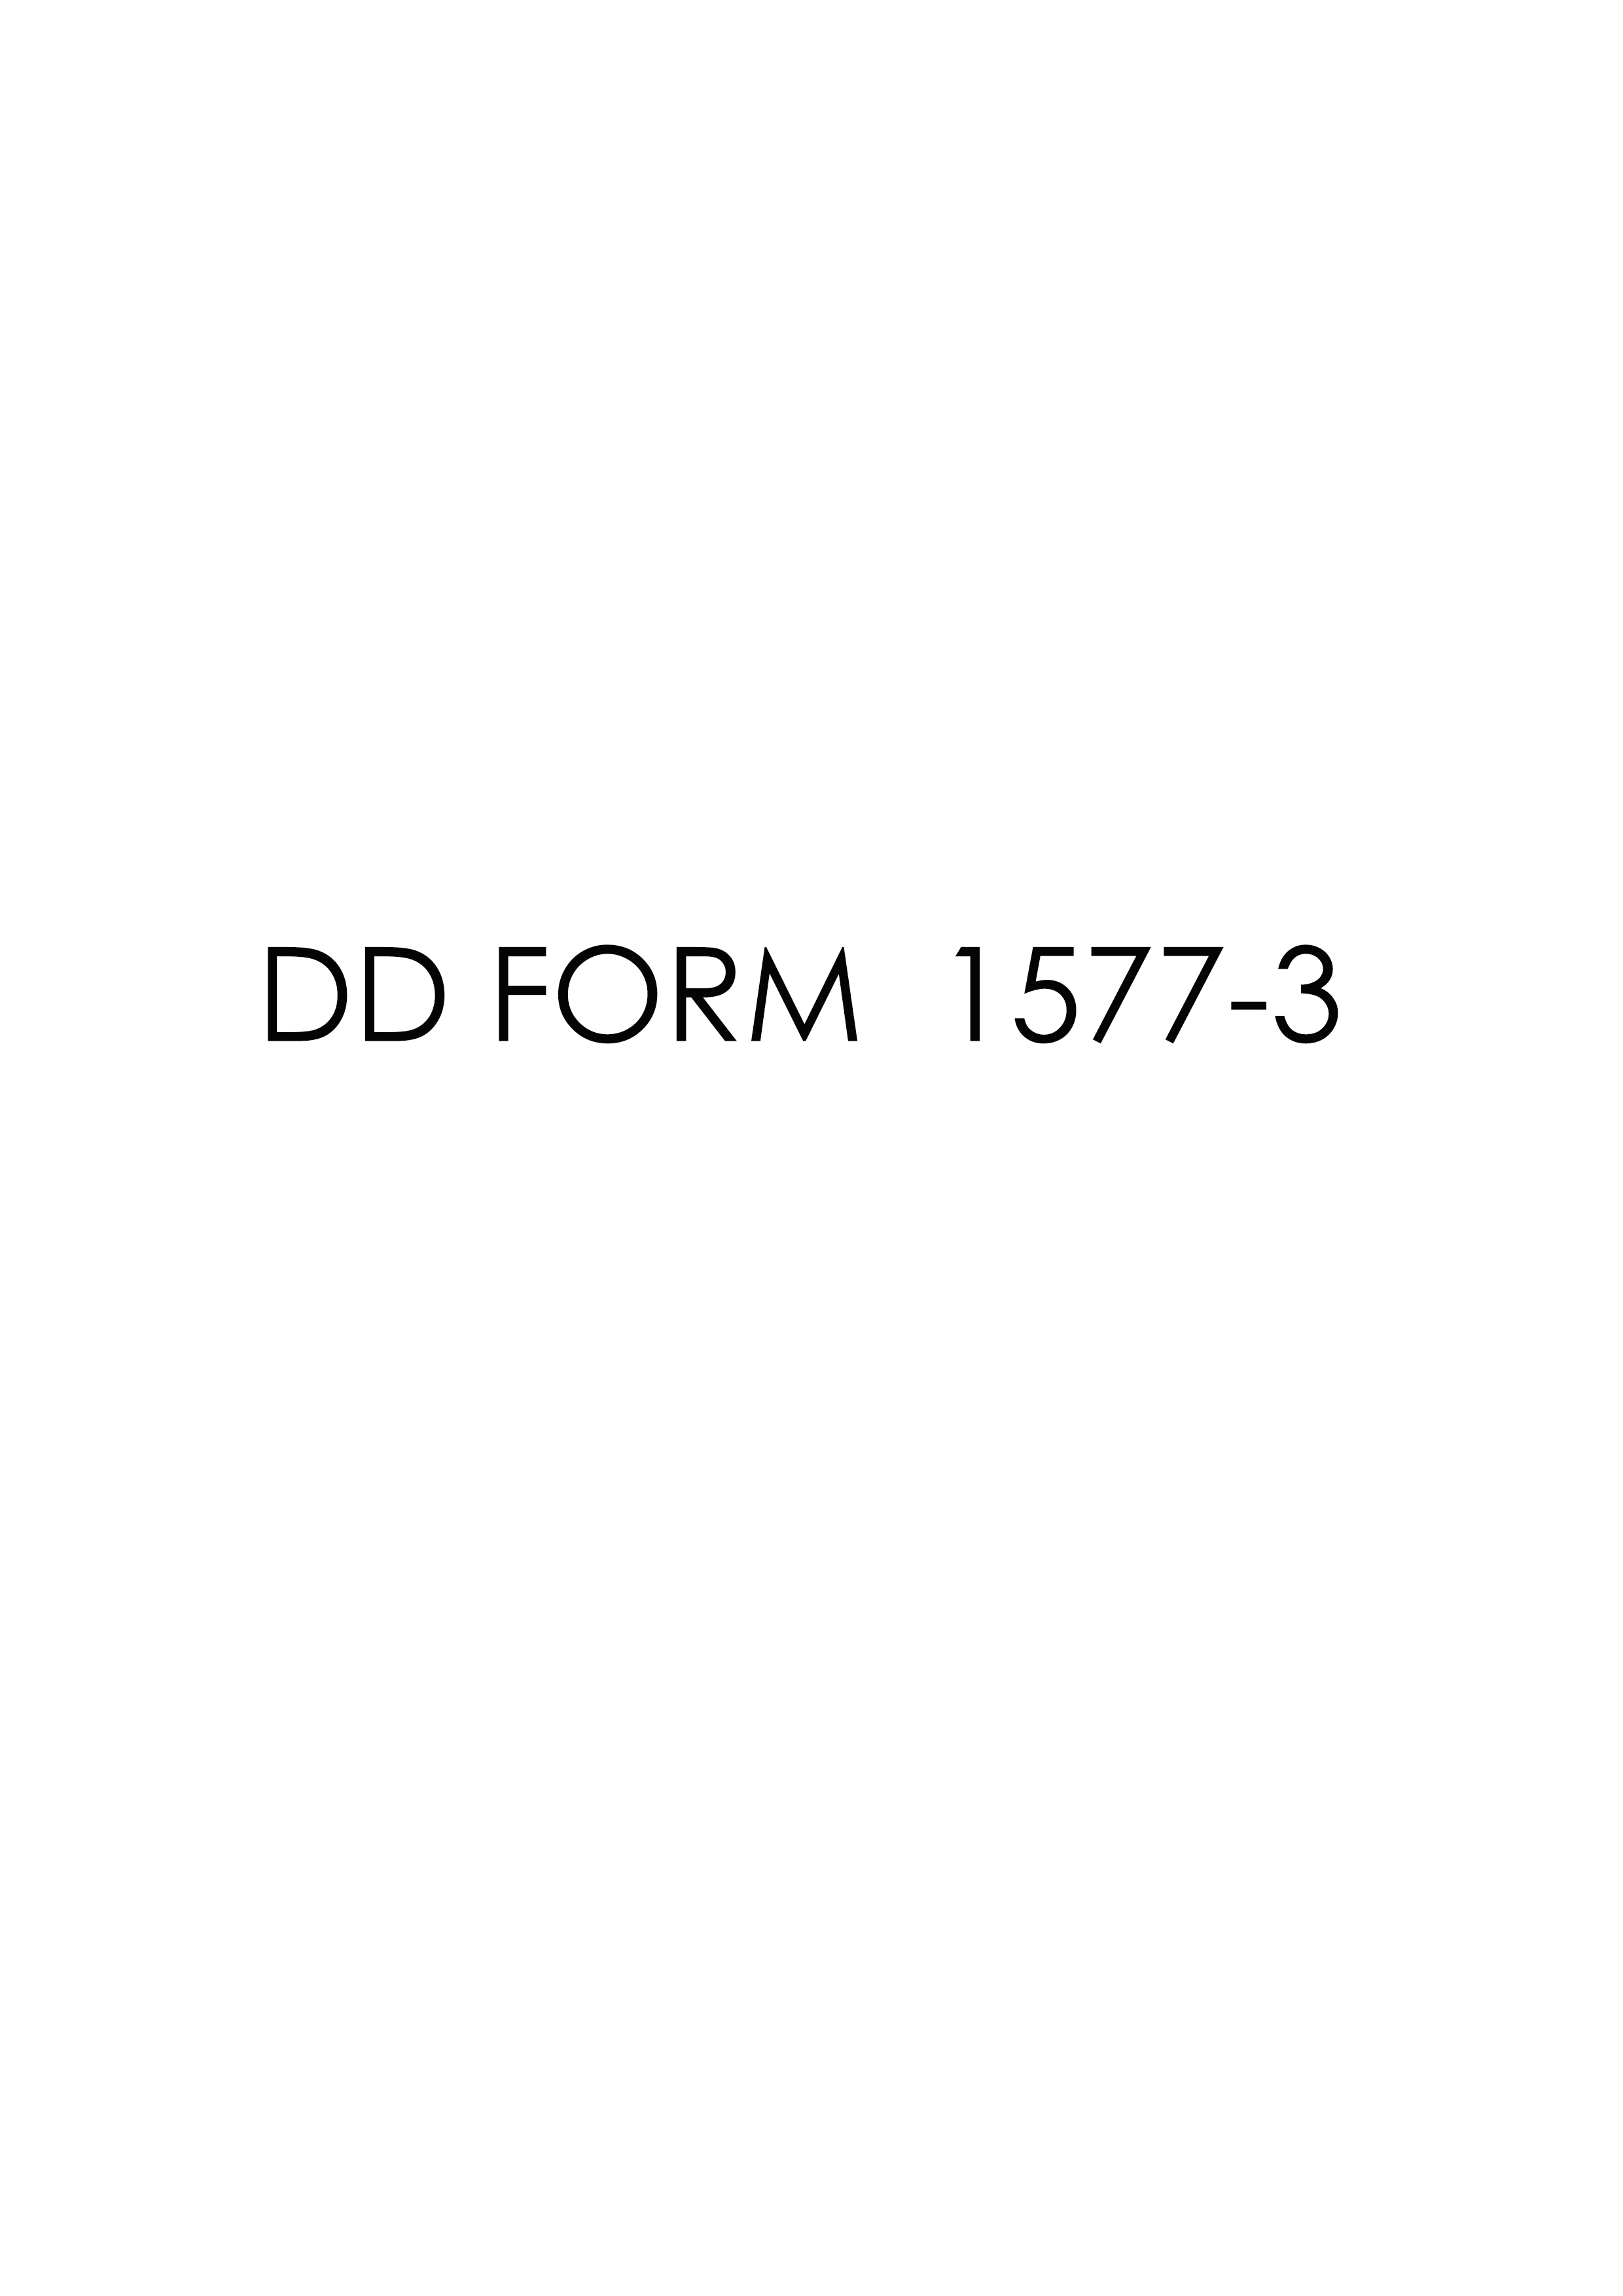 Download dd 1577-3 Form